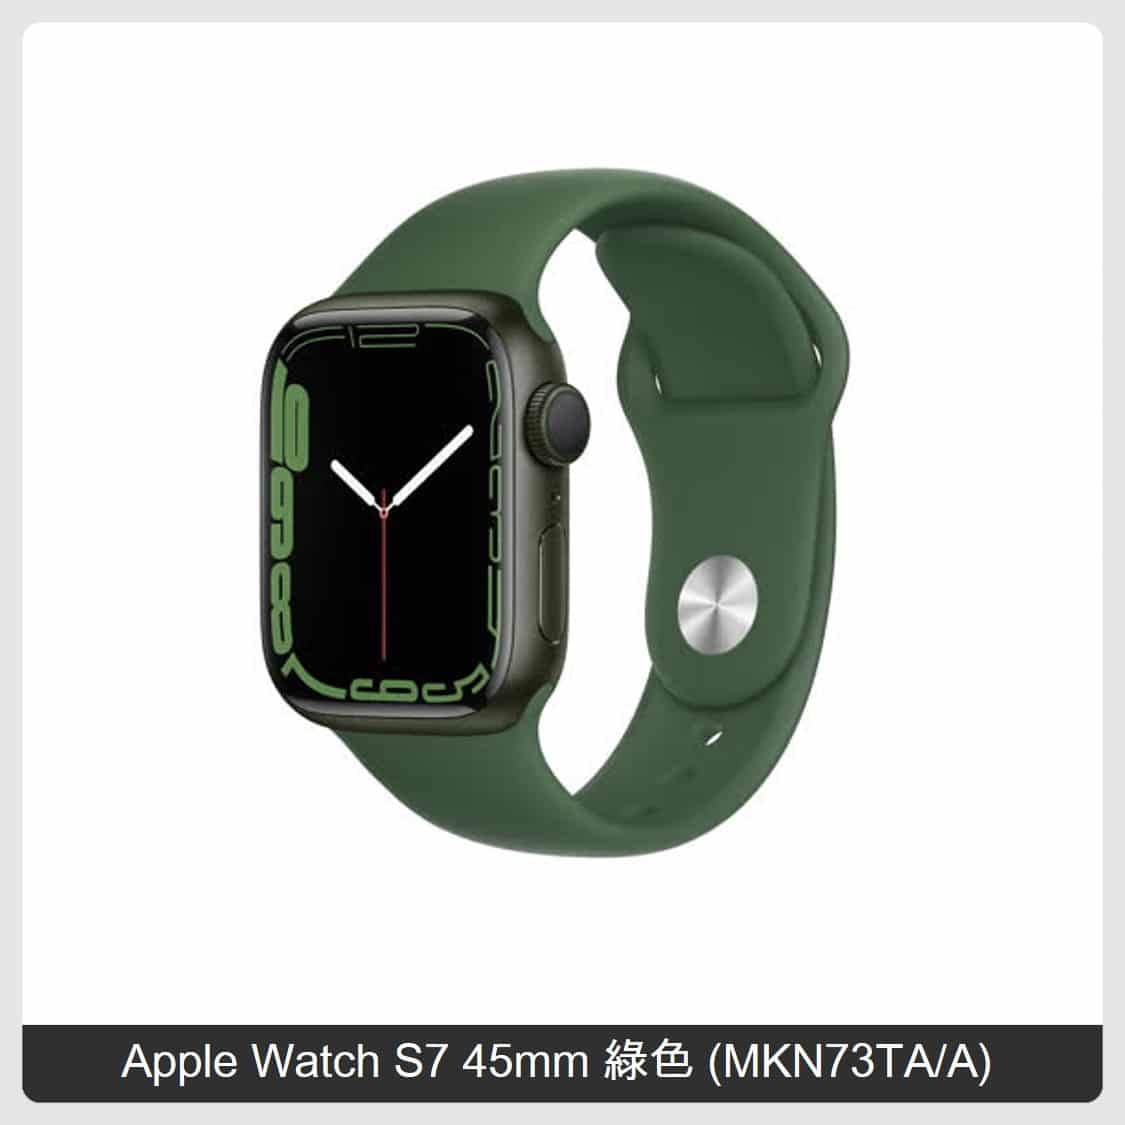 Apple Watch S7 45mm 綠色(MKN73TA/A) | 法雅客網路商店